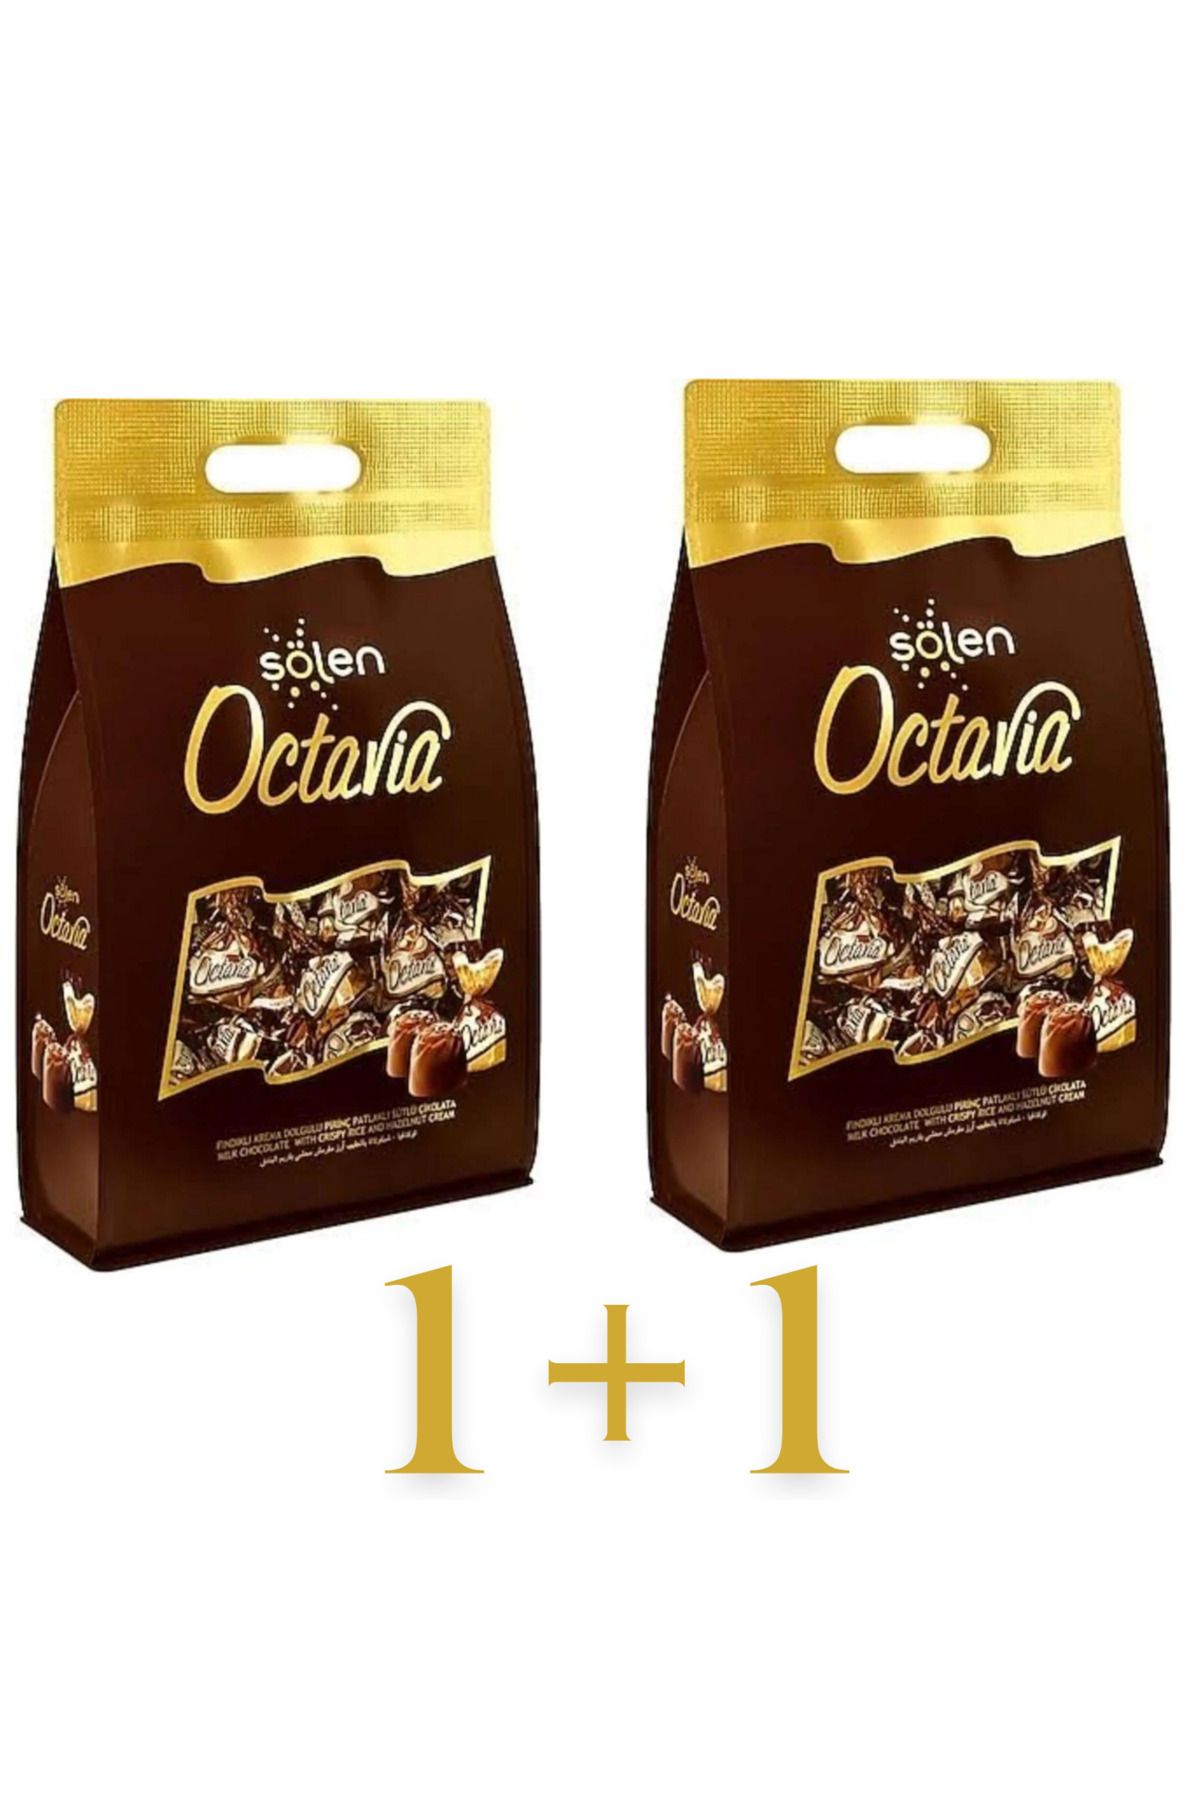 Şölen Çikolata Octavia Fındıklı Krema Dolgulu Pirinç Patlaklı Sütlü Çikolata 262 gr 2 Adet